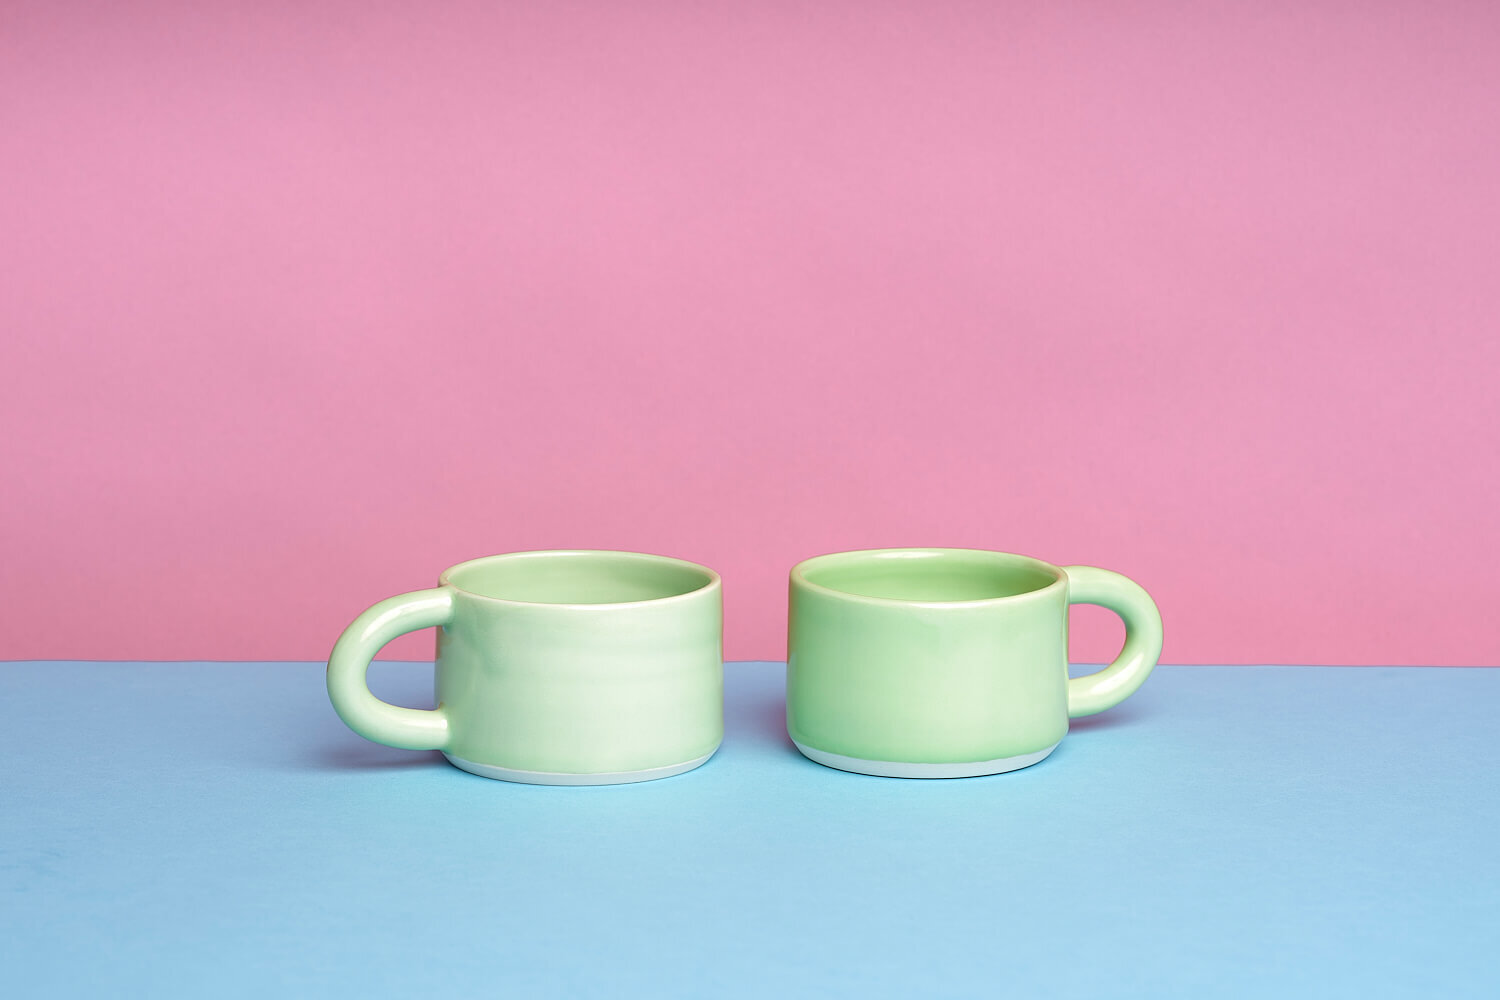 Keep Blooing- Pink and Blue Coffee Mug by Urvashi Patel - Fine Art America